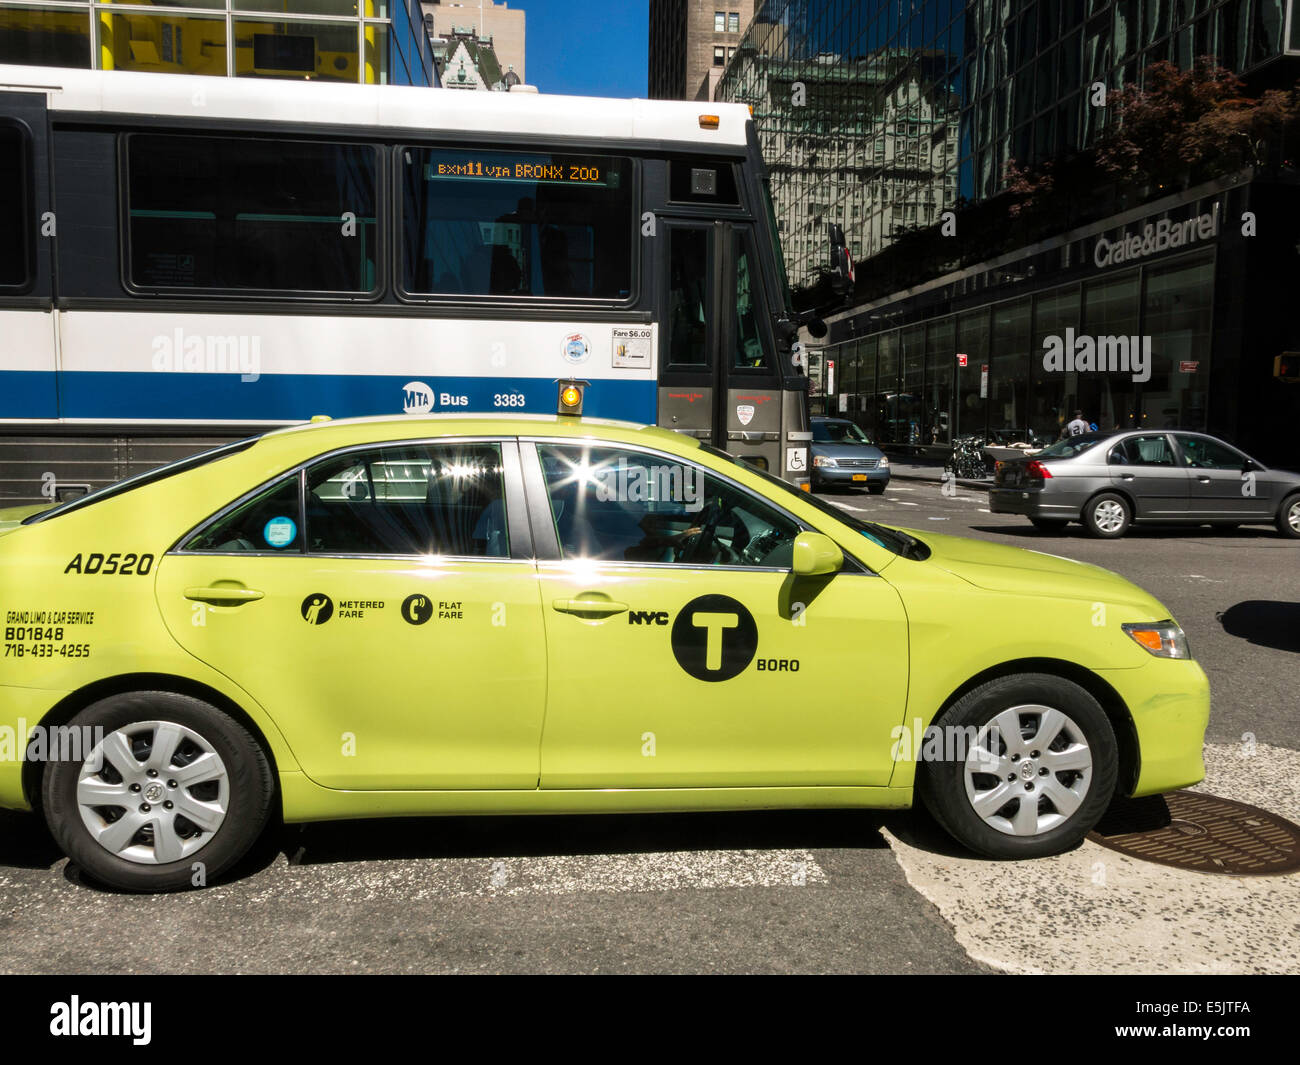 New InterBoro Taxi Cab, NYC, USA Stock Photo